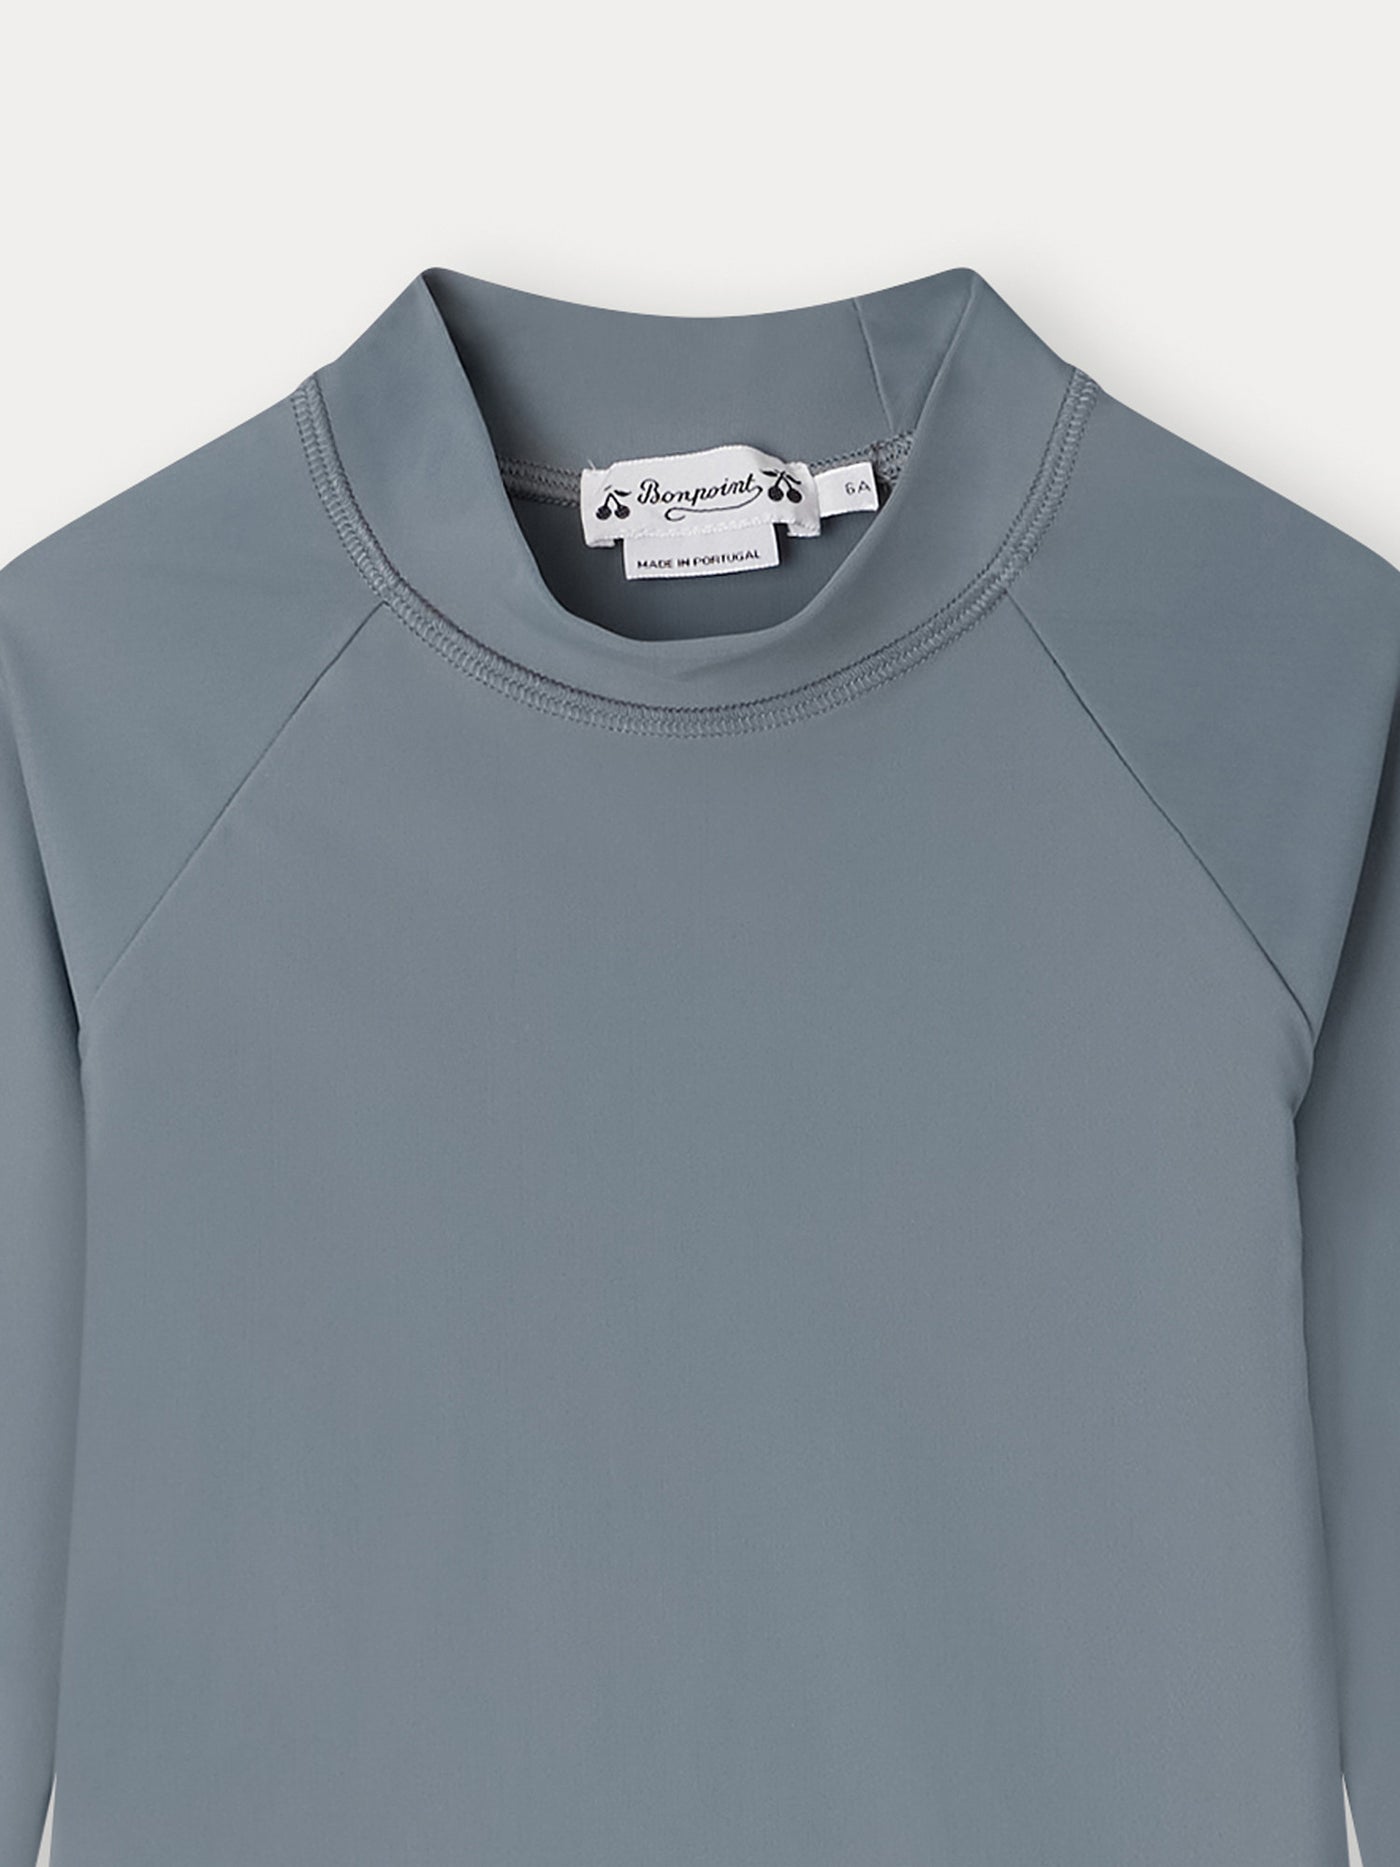 Caius UV Protection T-Shirt medium gray